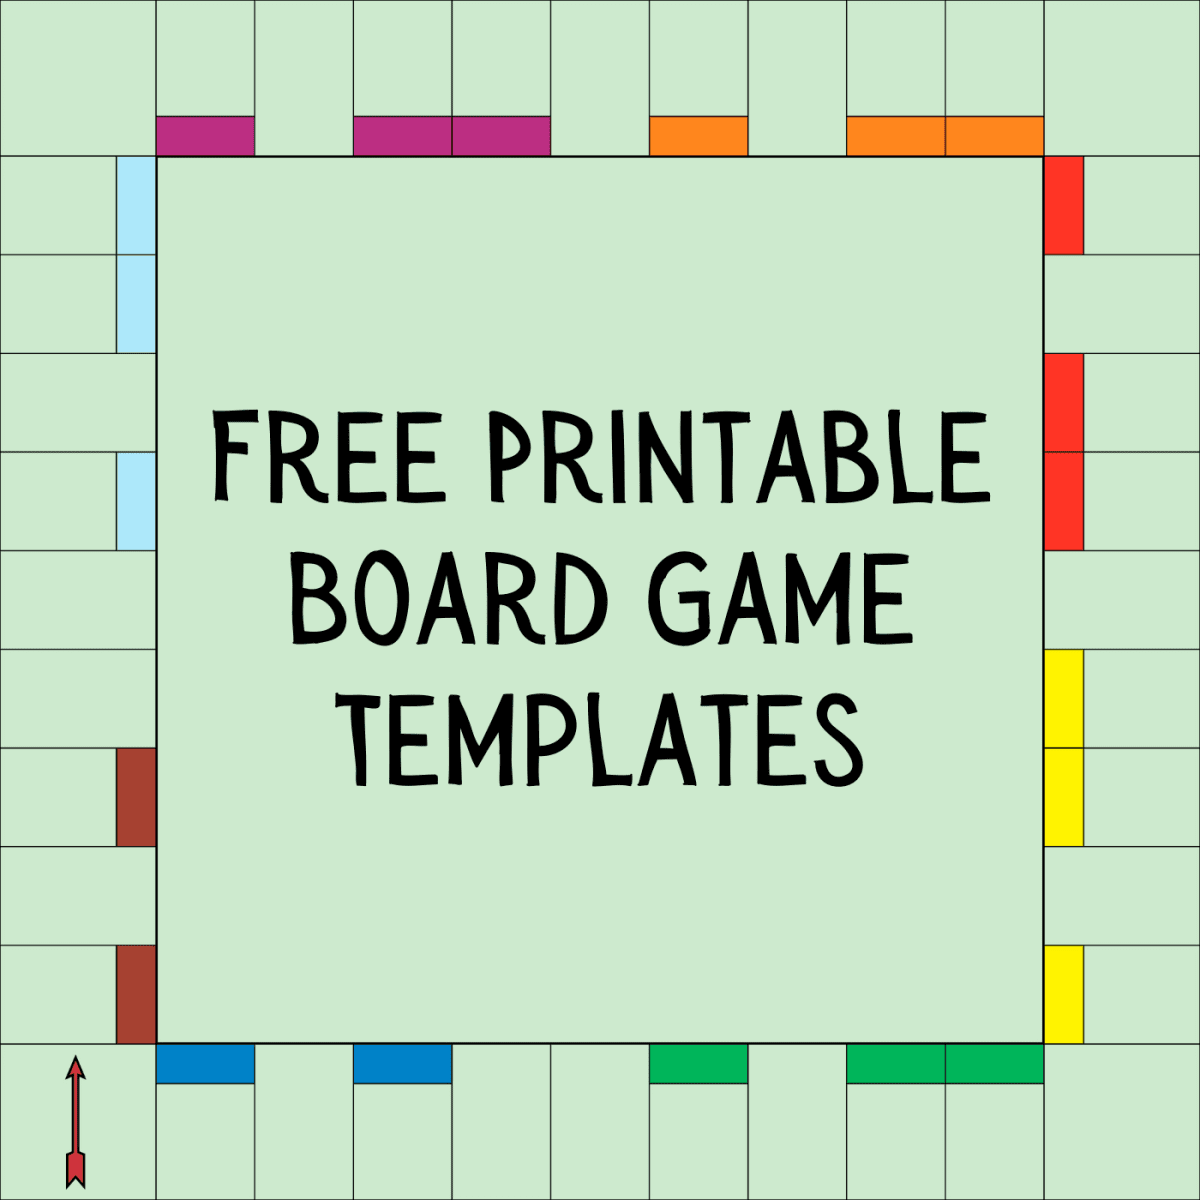 Free printable board game templates